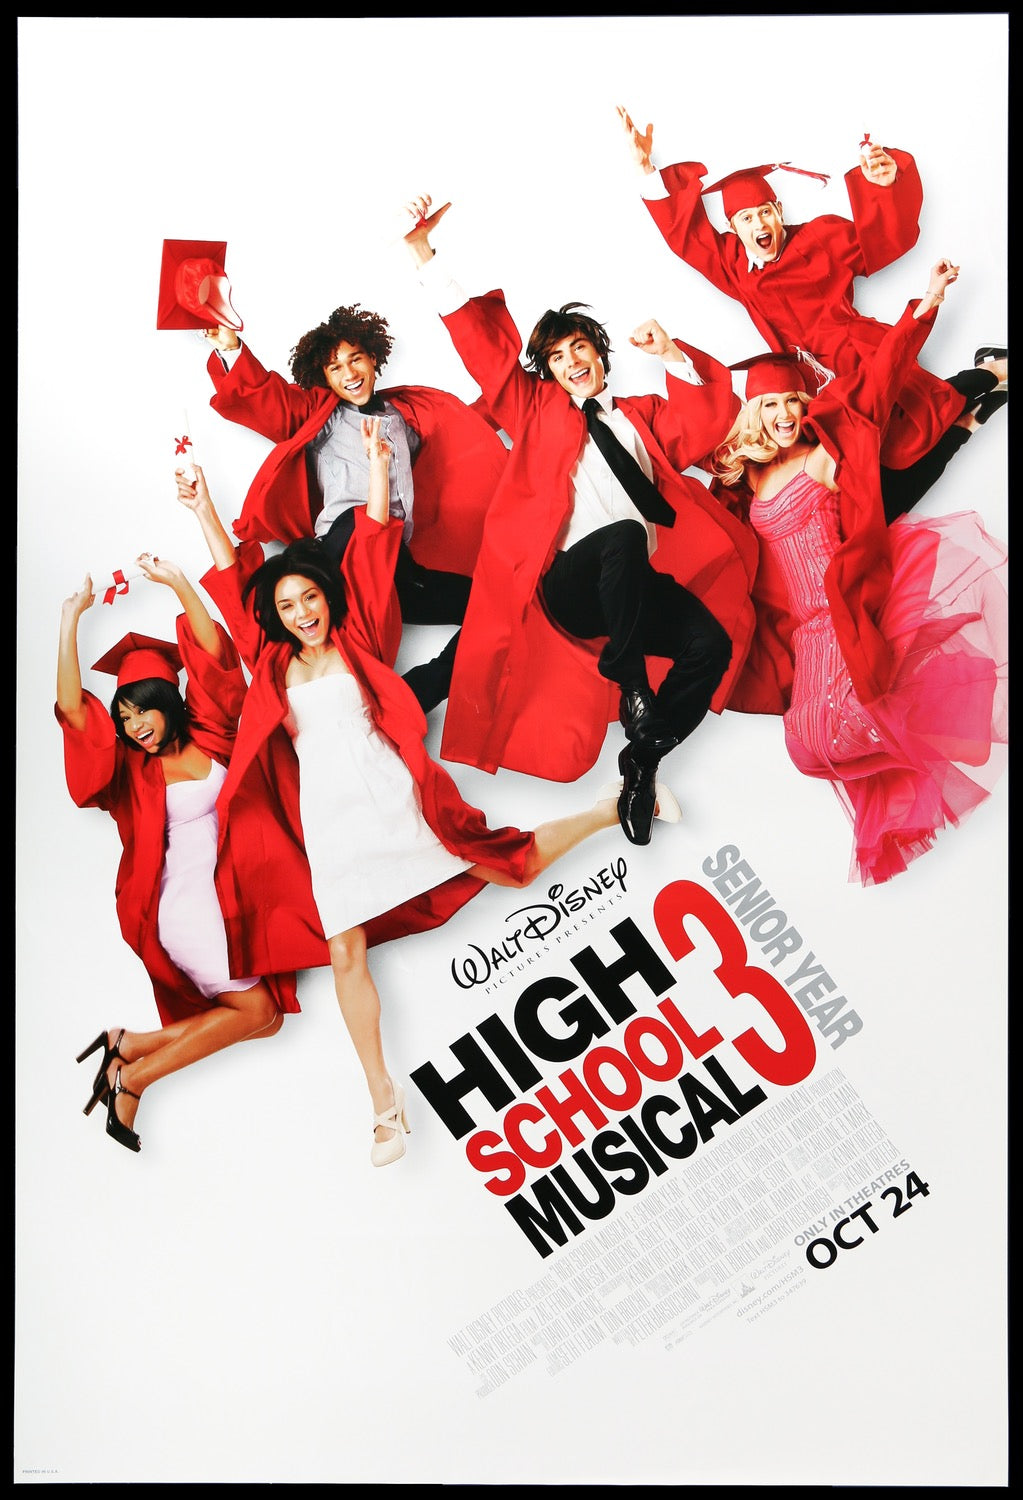 High School Musical 3 - Senior Year (2008) original movie poster for sale at Original Film Art